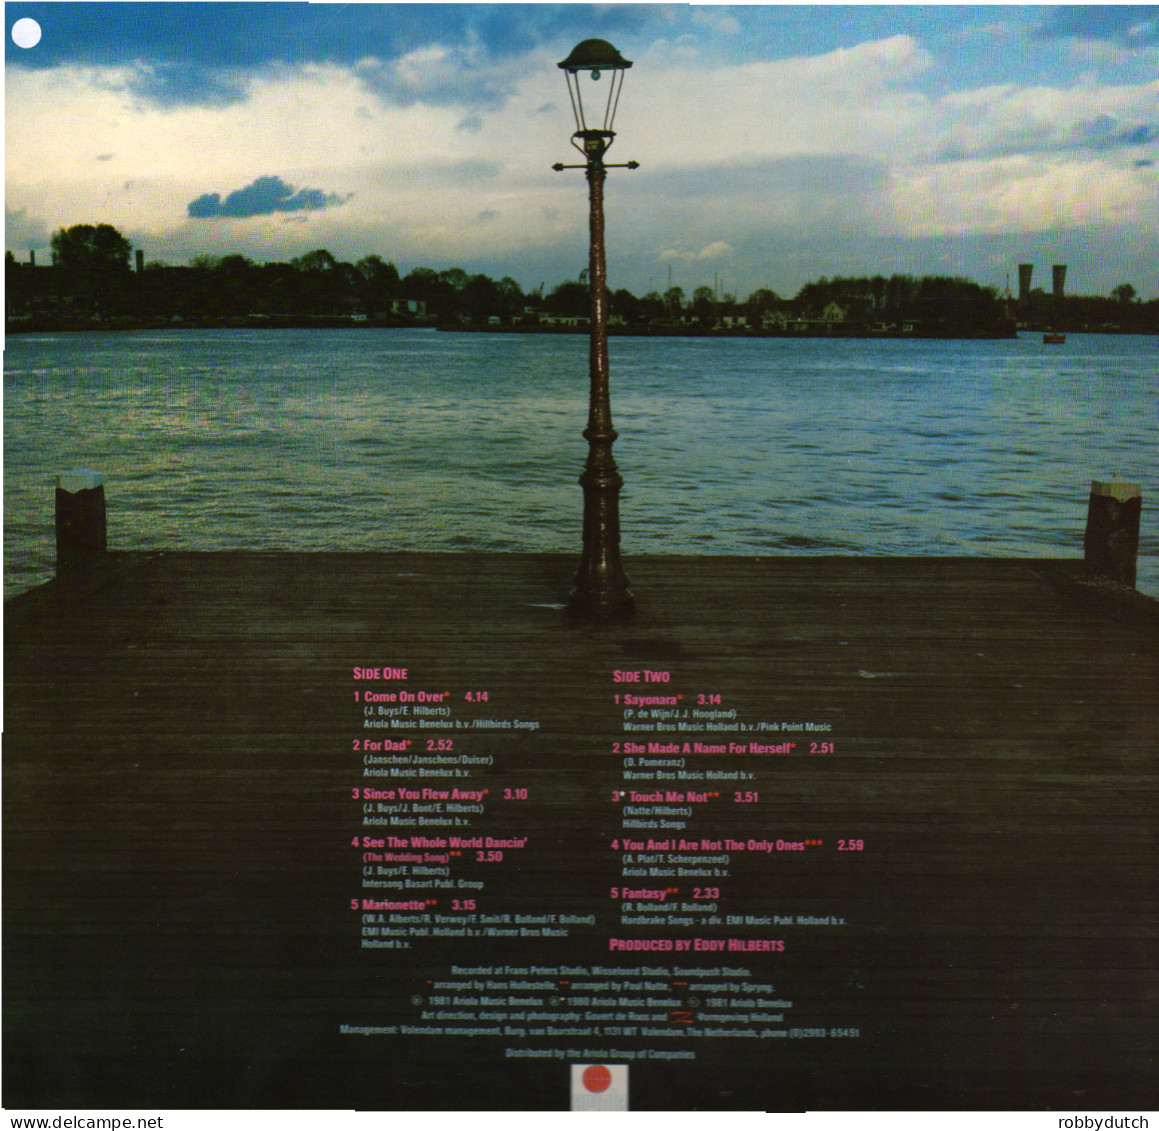 * LP *  SPRYNG & MARIBELLE - FOR ALL SEASONS (Holland 1981 EX) - Disco & Pop